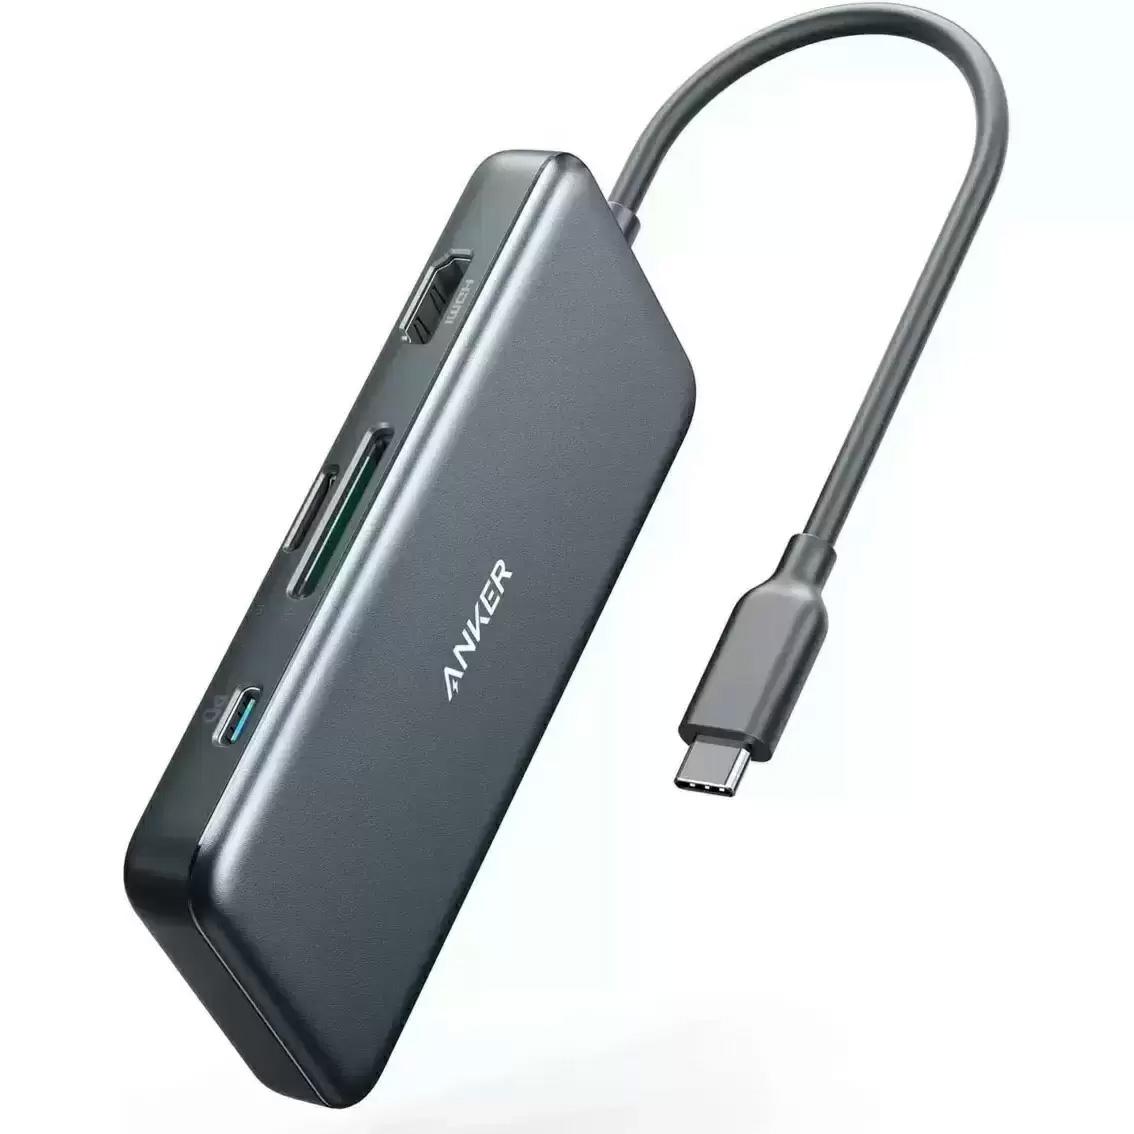 Anker 7-in-1 USB-C to HSMI Hub for $26.99 Shipped